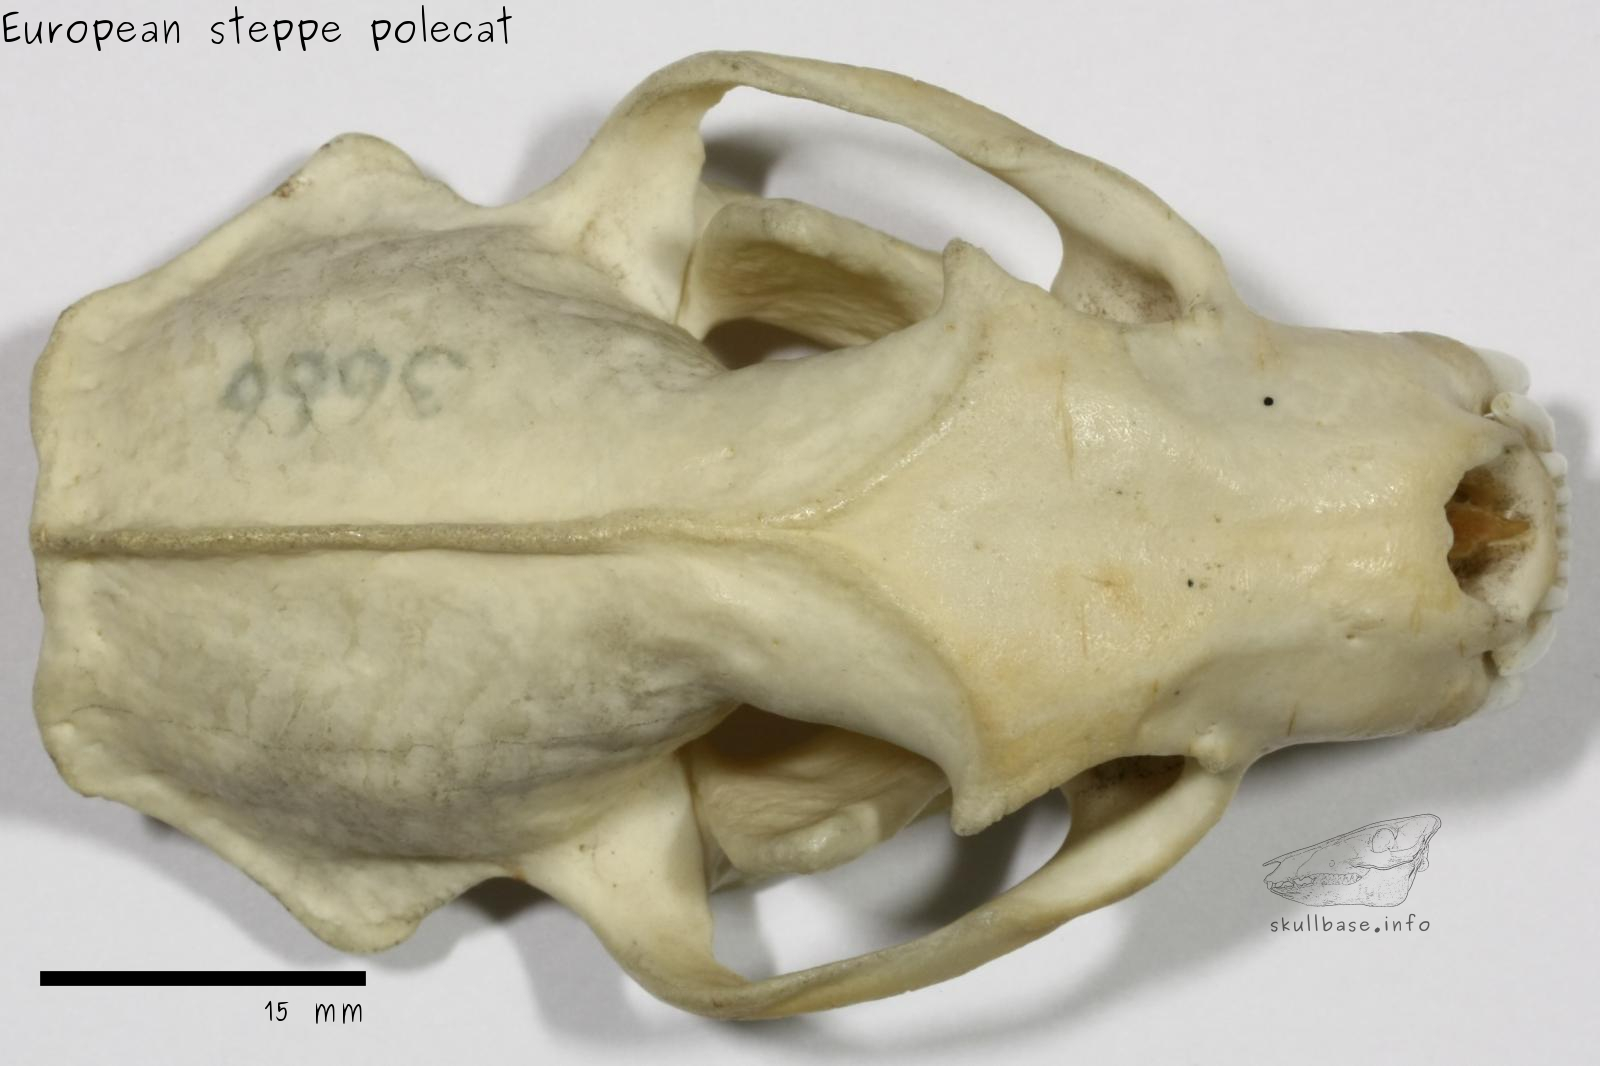 European steppe polecat (Mustela eversmanii hungarica) skull dorsal view